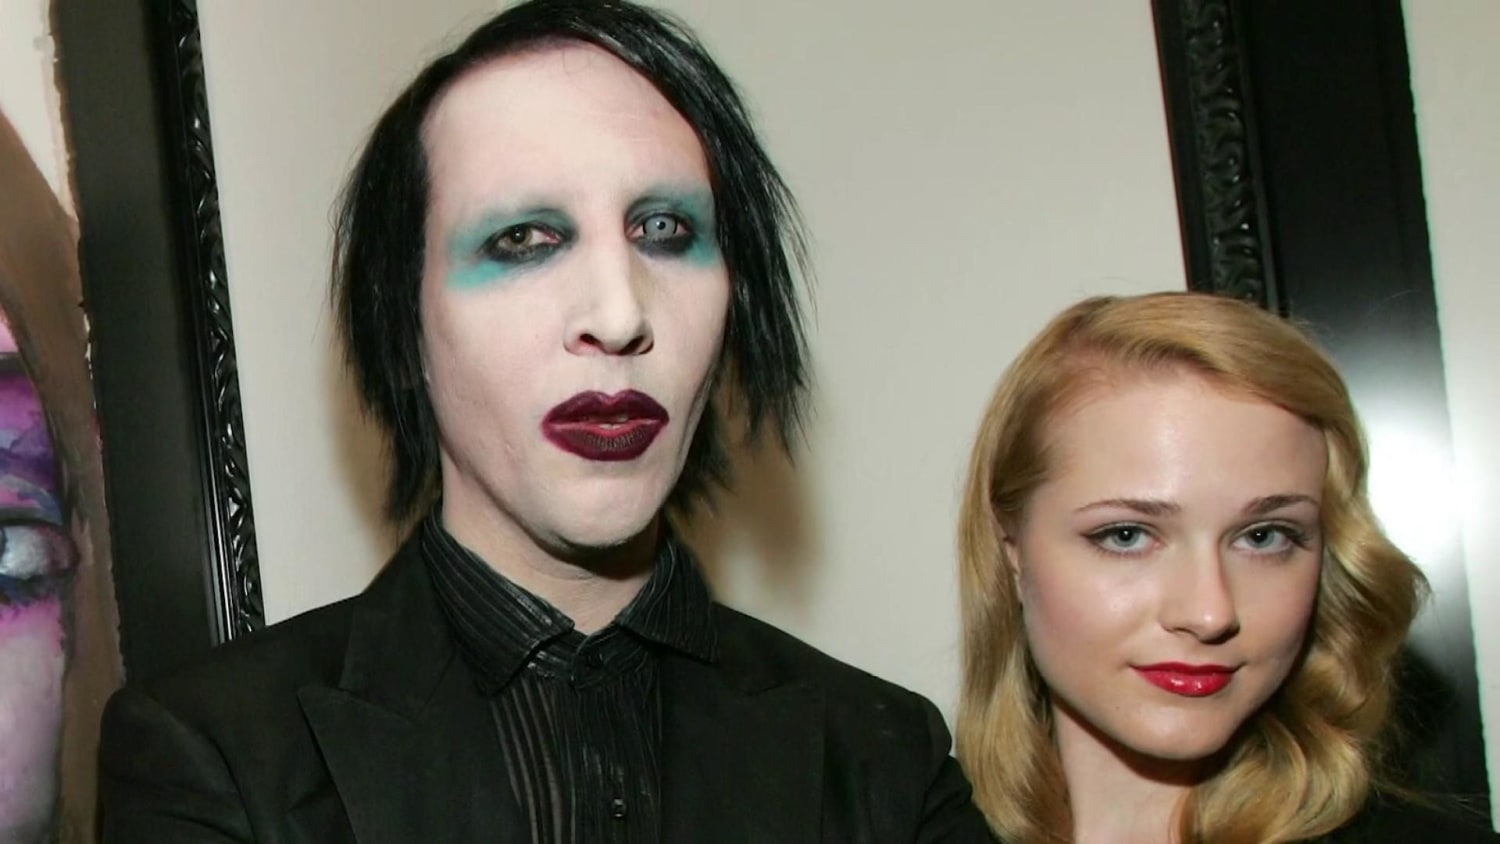 Marilyn Mansons ex-girlfriend accuses him of rape, abuse in lawsuit